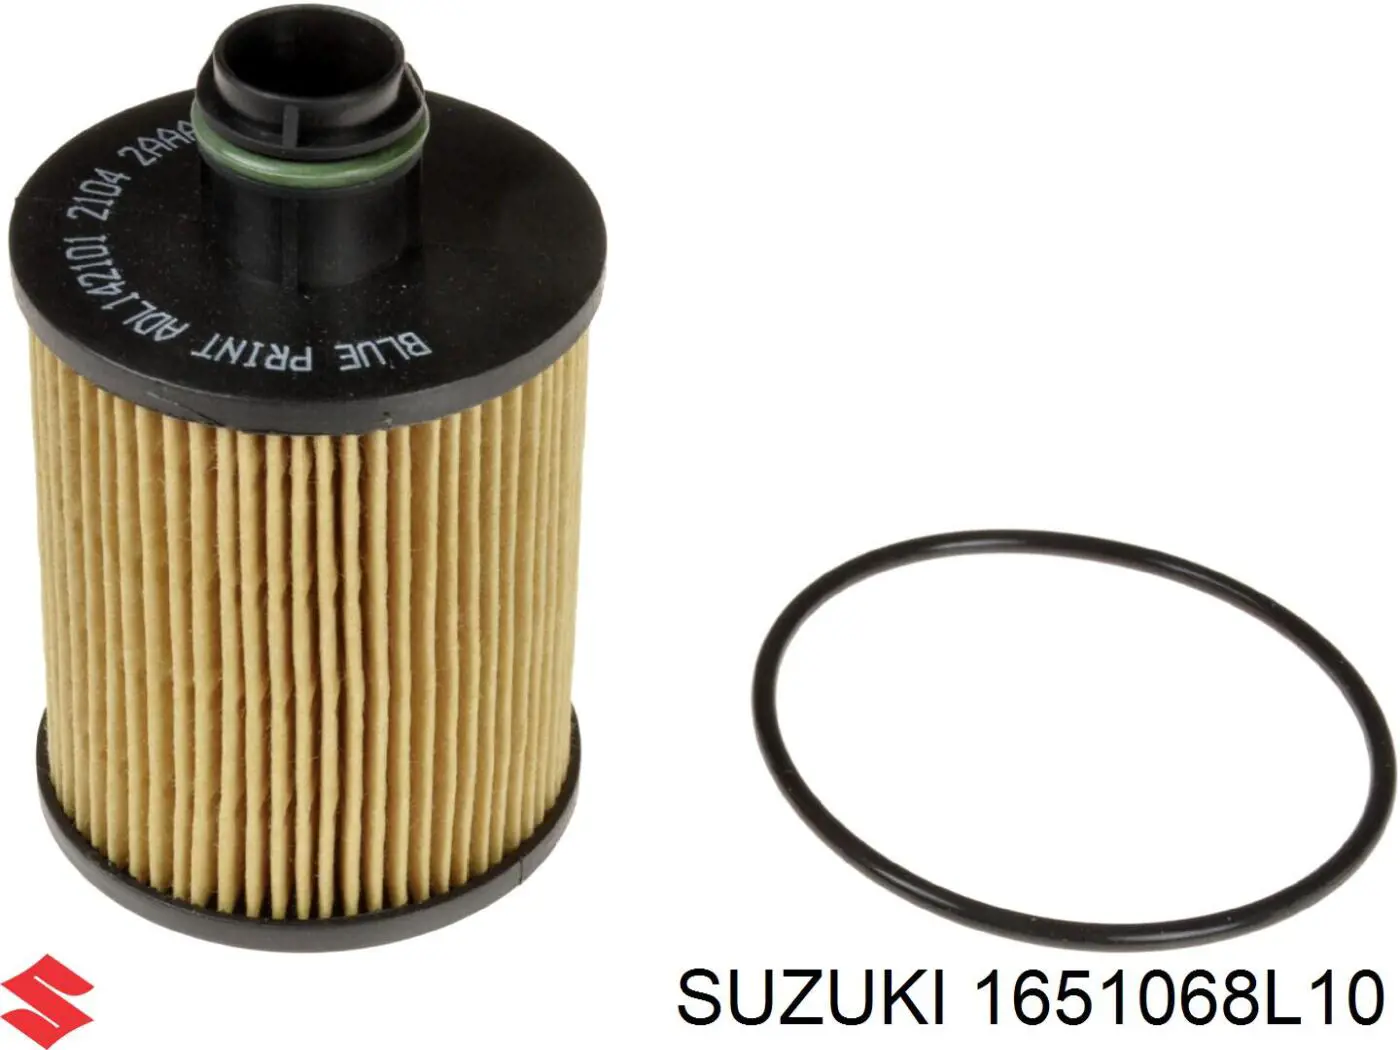 1651068L10 Suzuki масляный фильтр